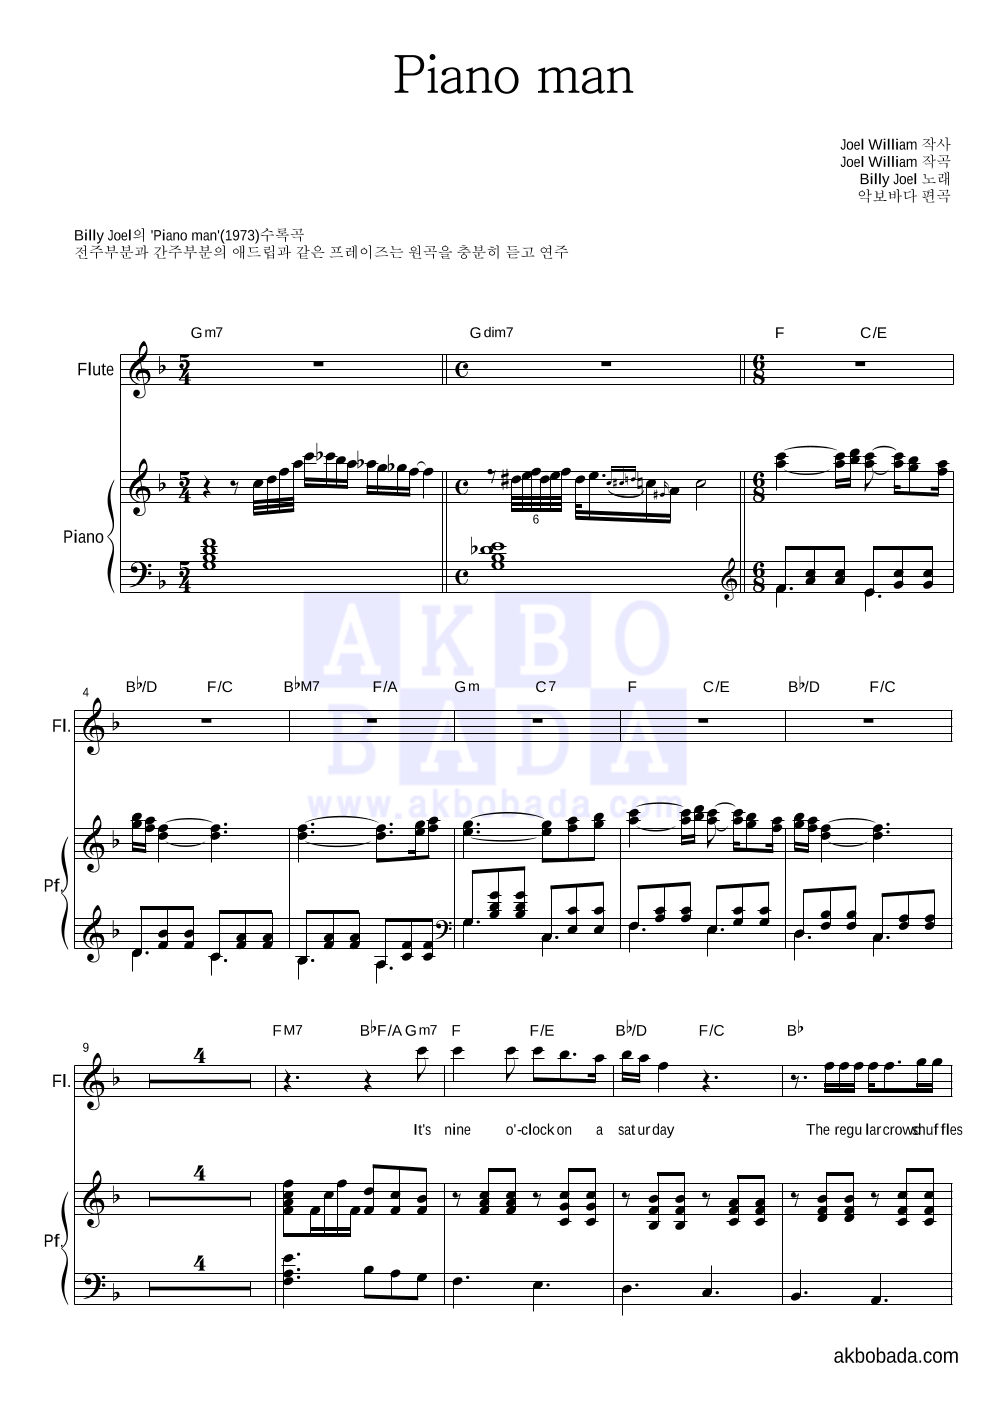 Billy Joel - Piano man 플룻&피아노 악보 